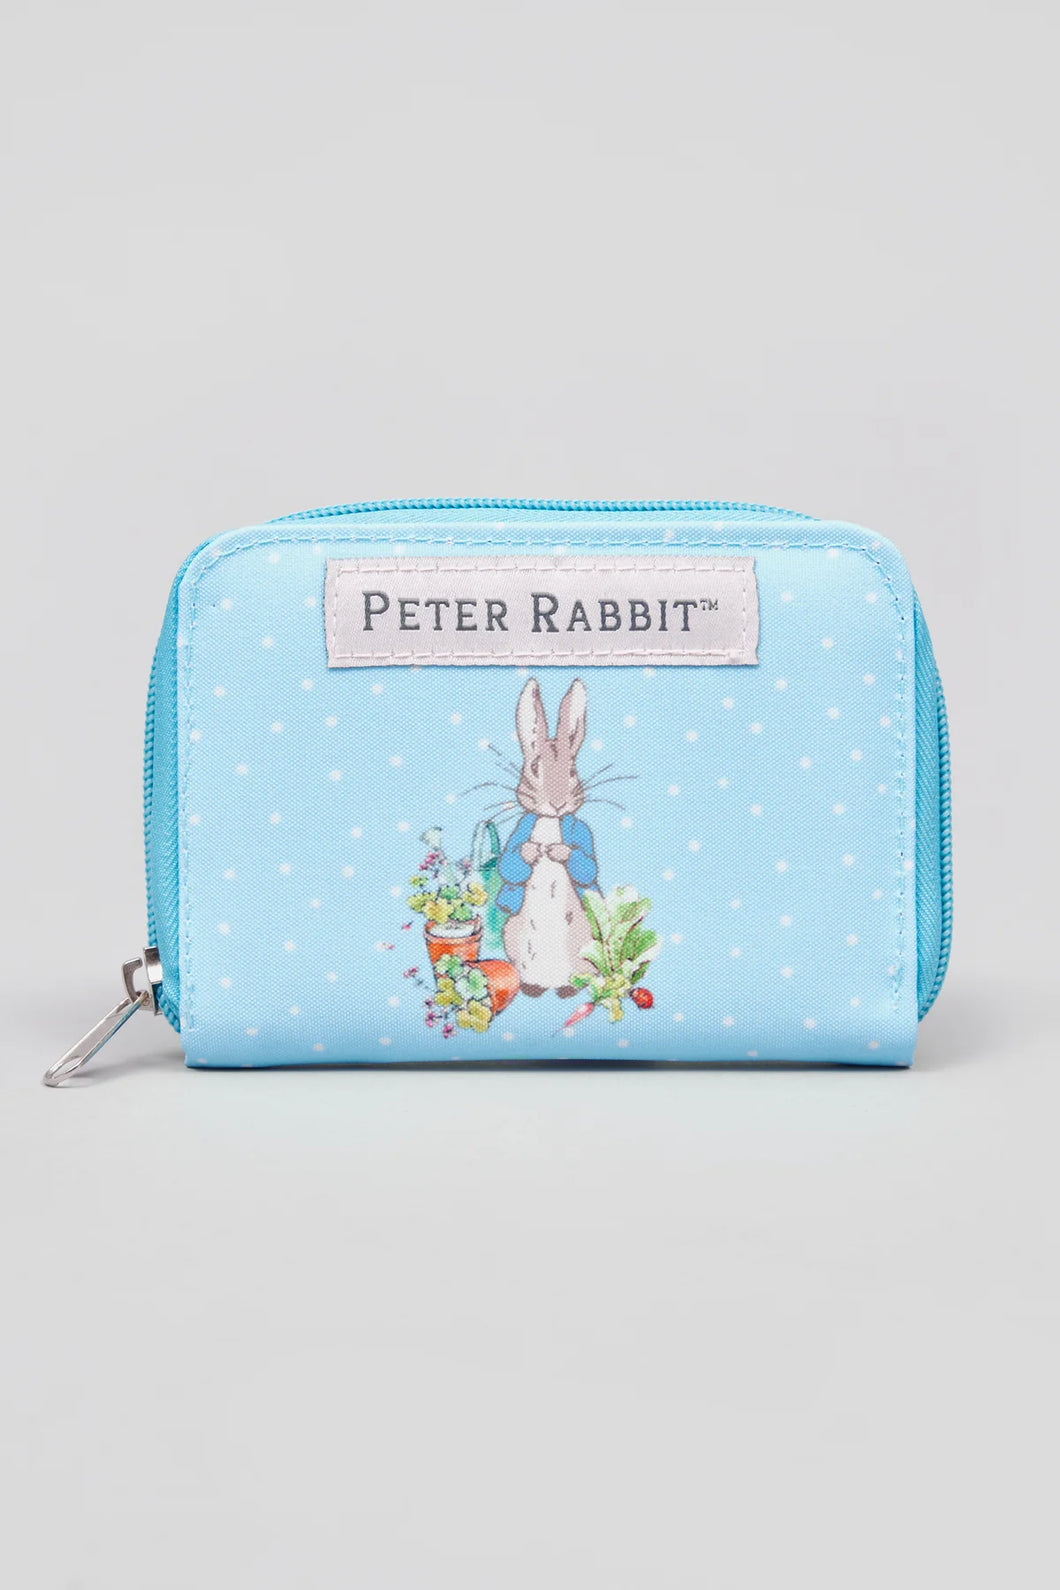 peter rabbit purse